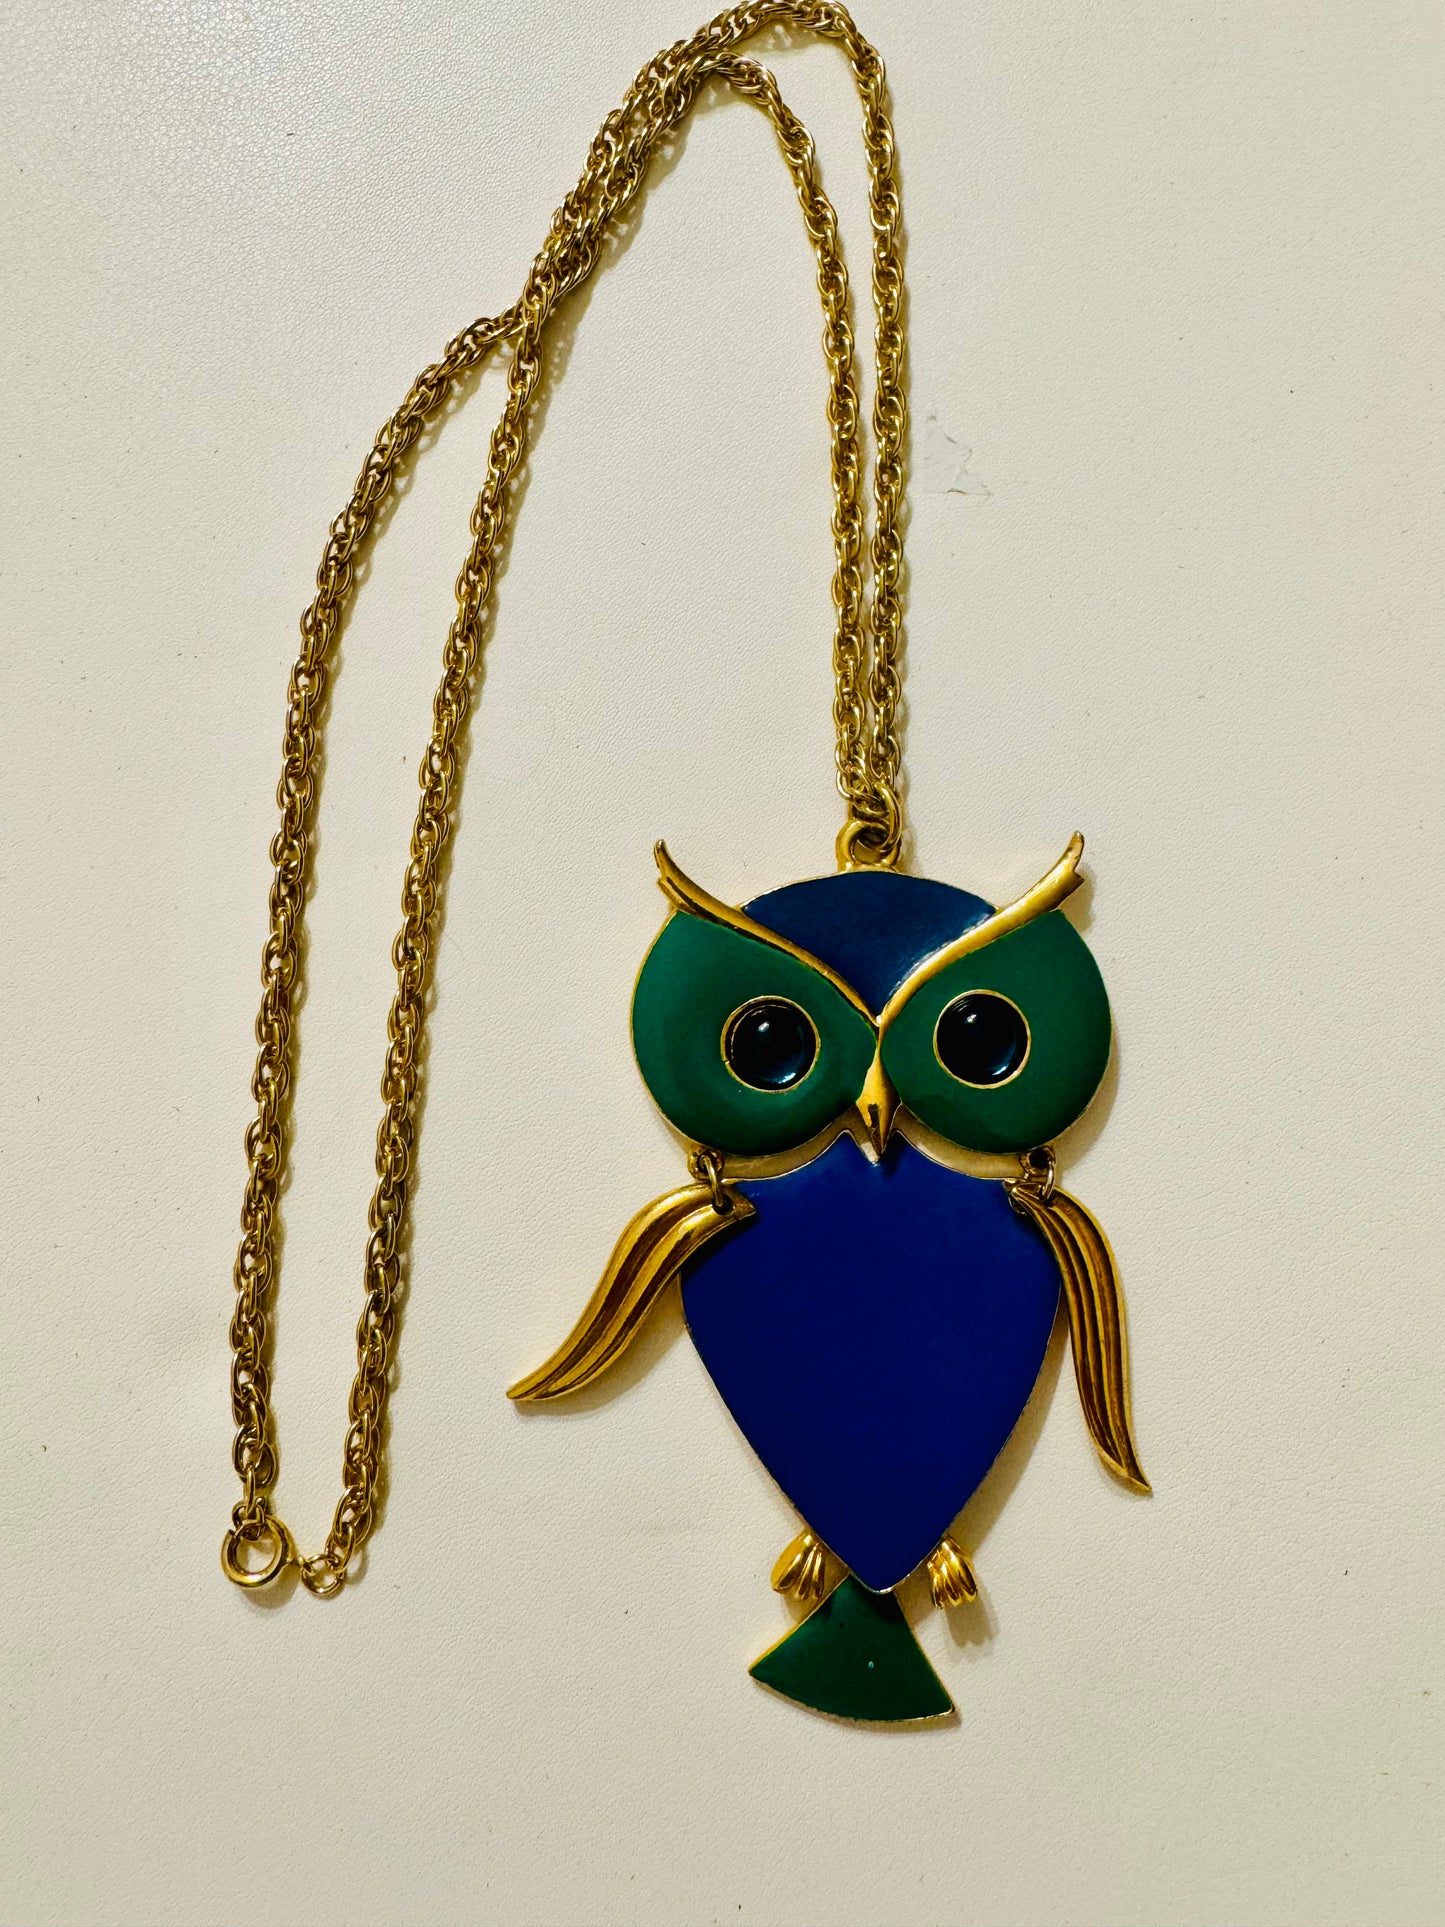 Adorable owl gold tone and enamel pendant